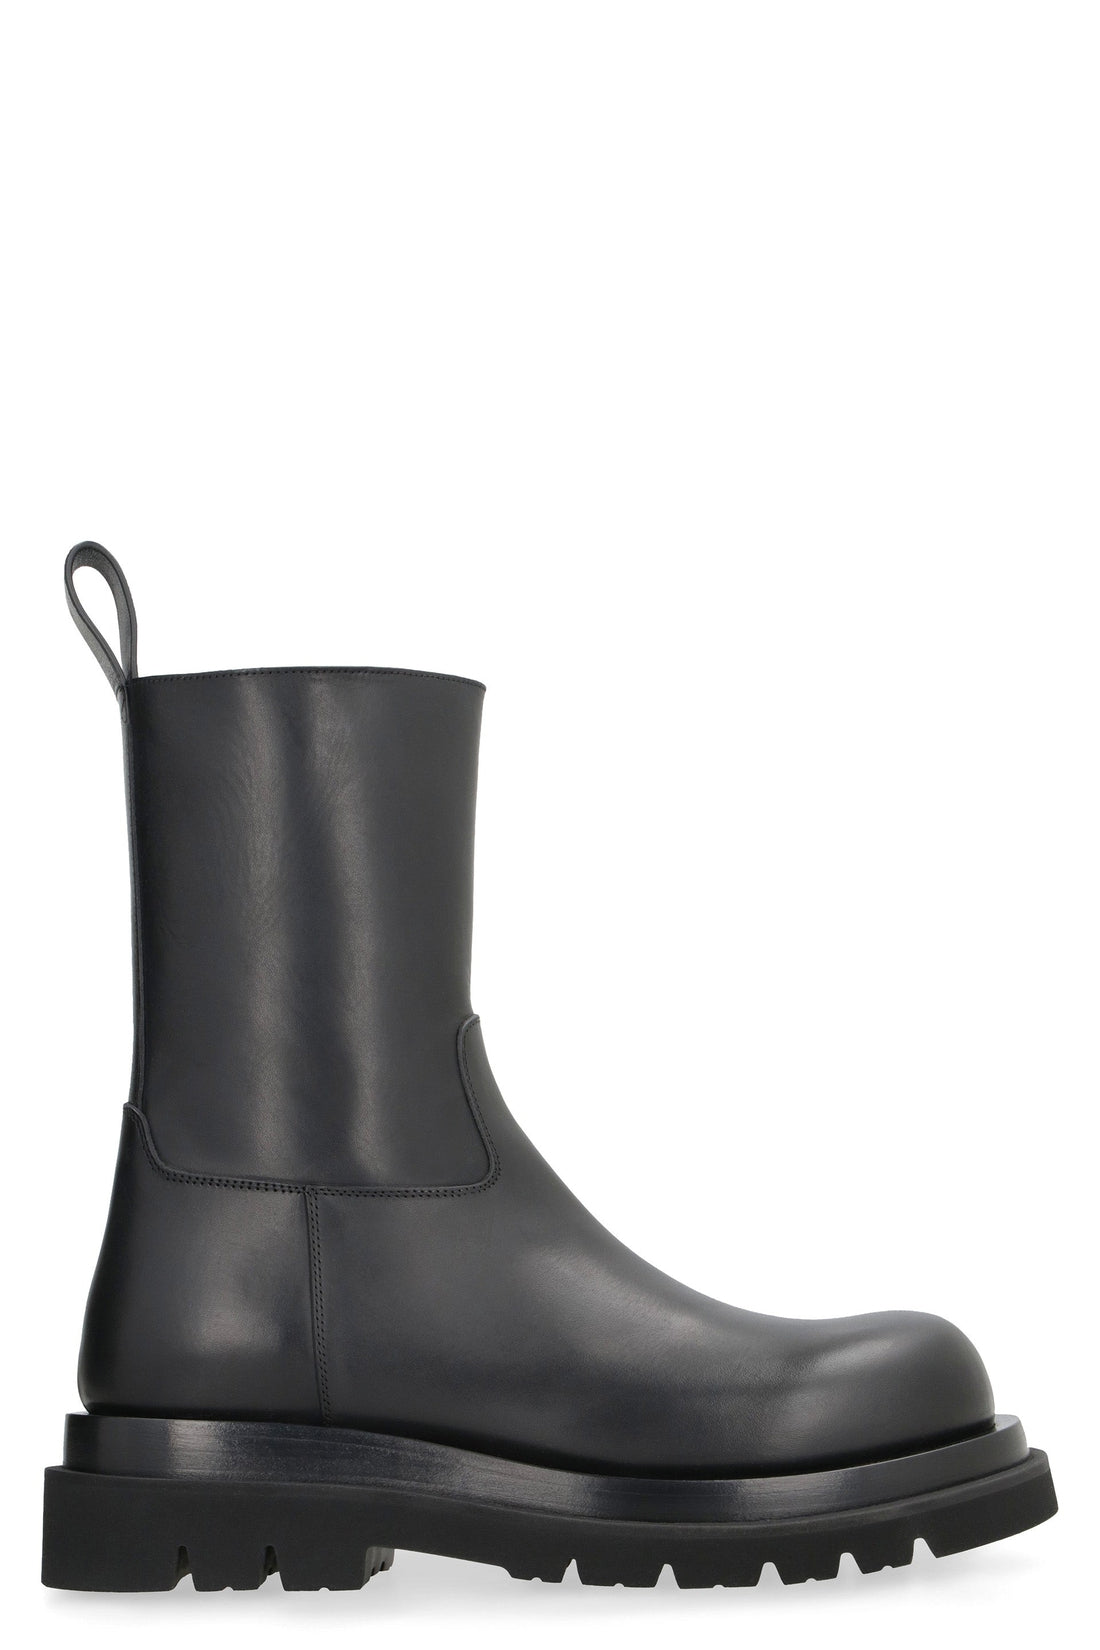 Bottega Veneta-OUTLET-SALE-Lug leather ankle boots-ARCHIVIST